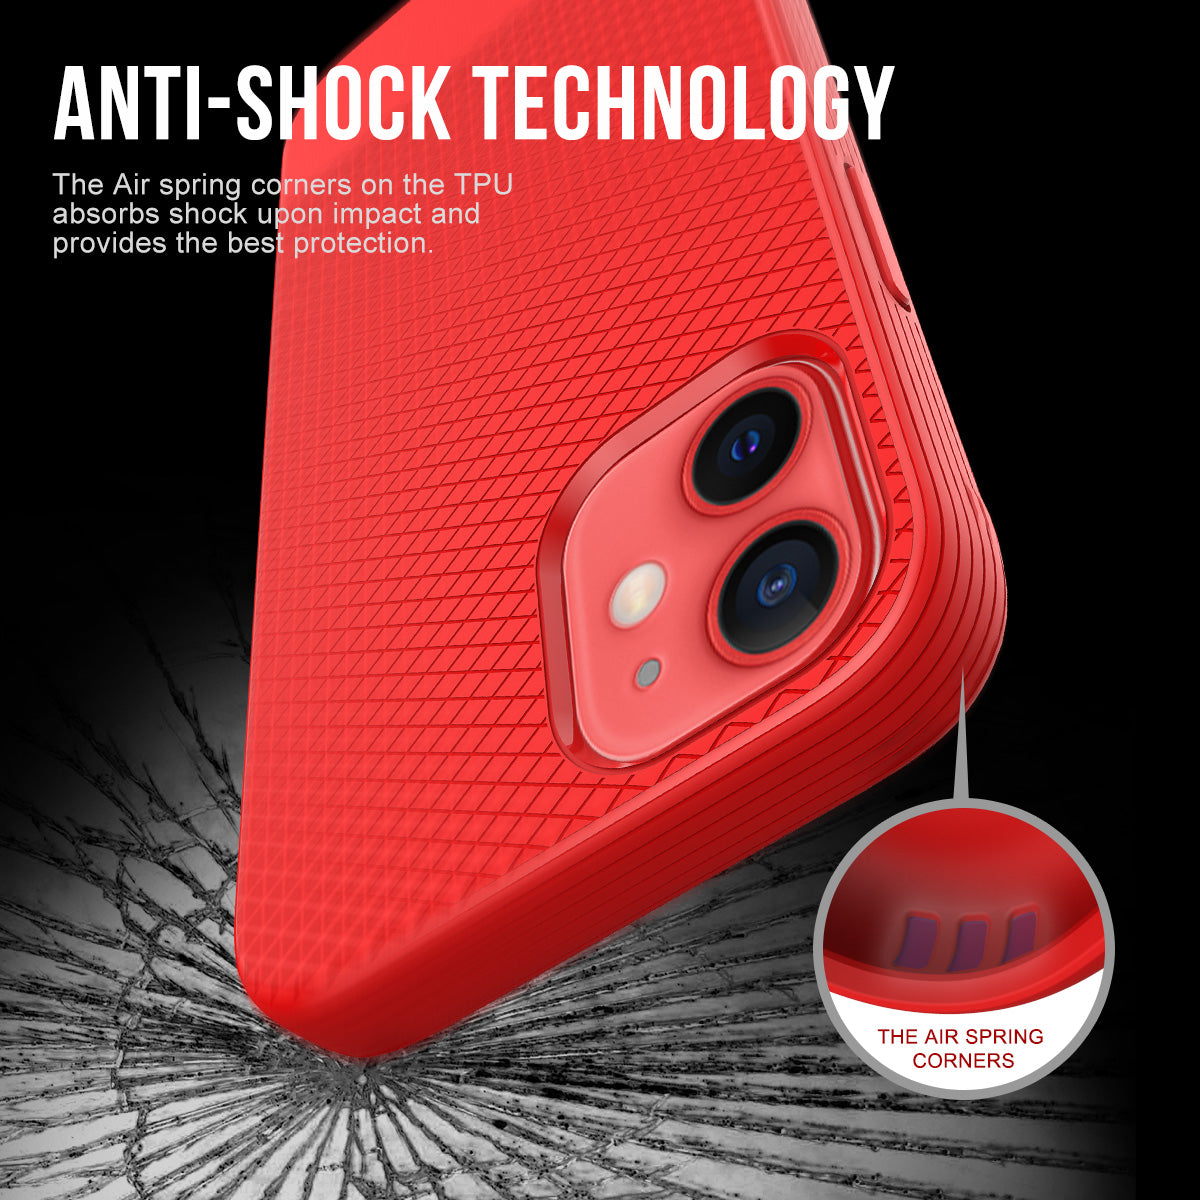 ZEOS Flexx Case for iPhone 12 Pro